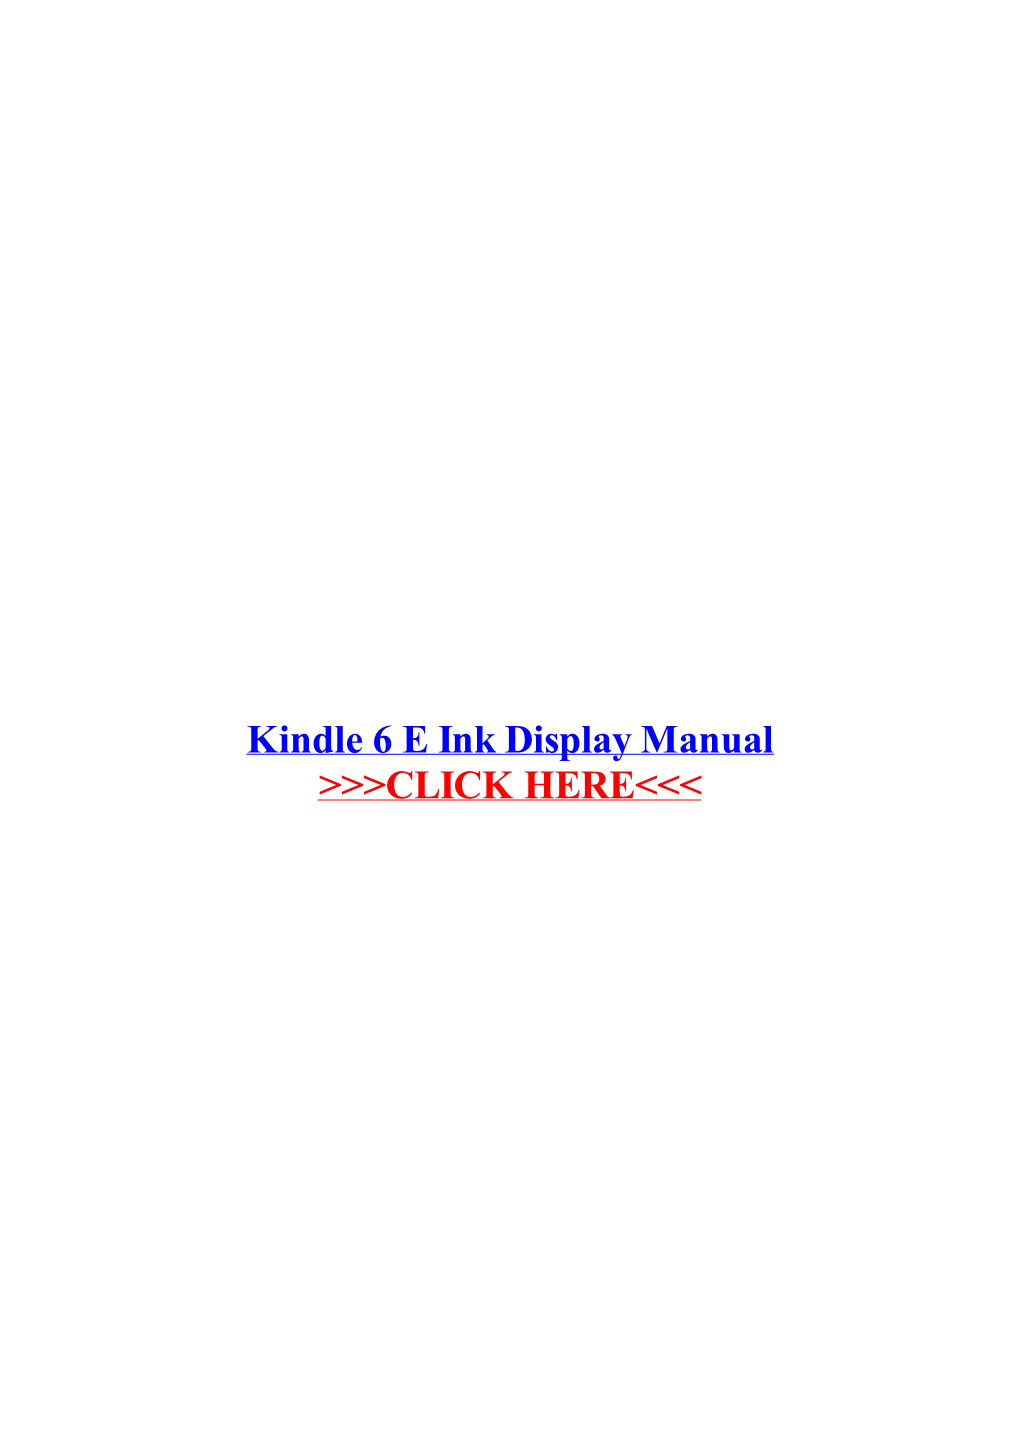 Kindle 6 E Ink Display Manual